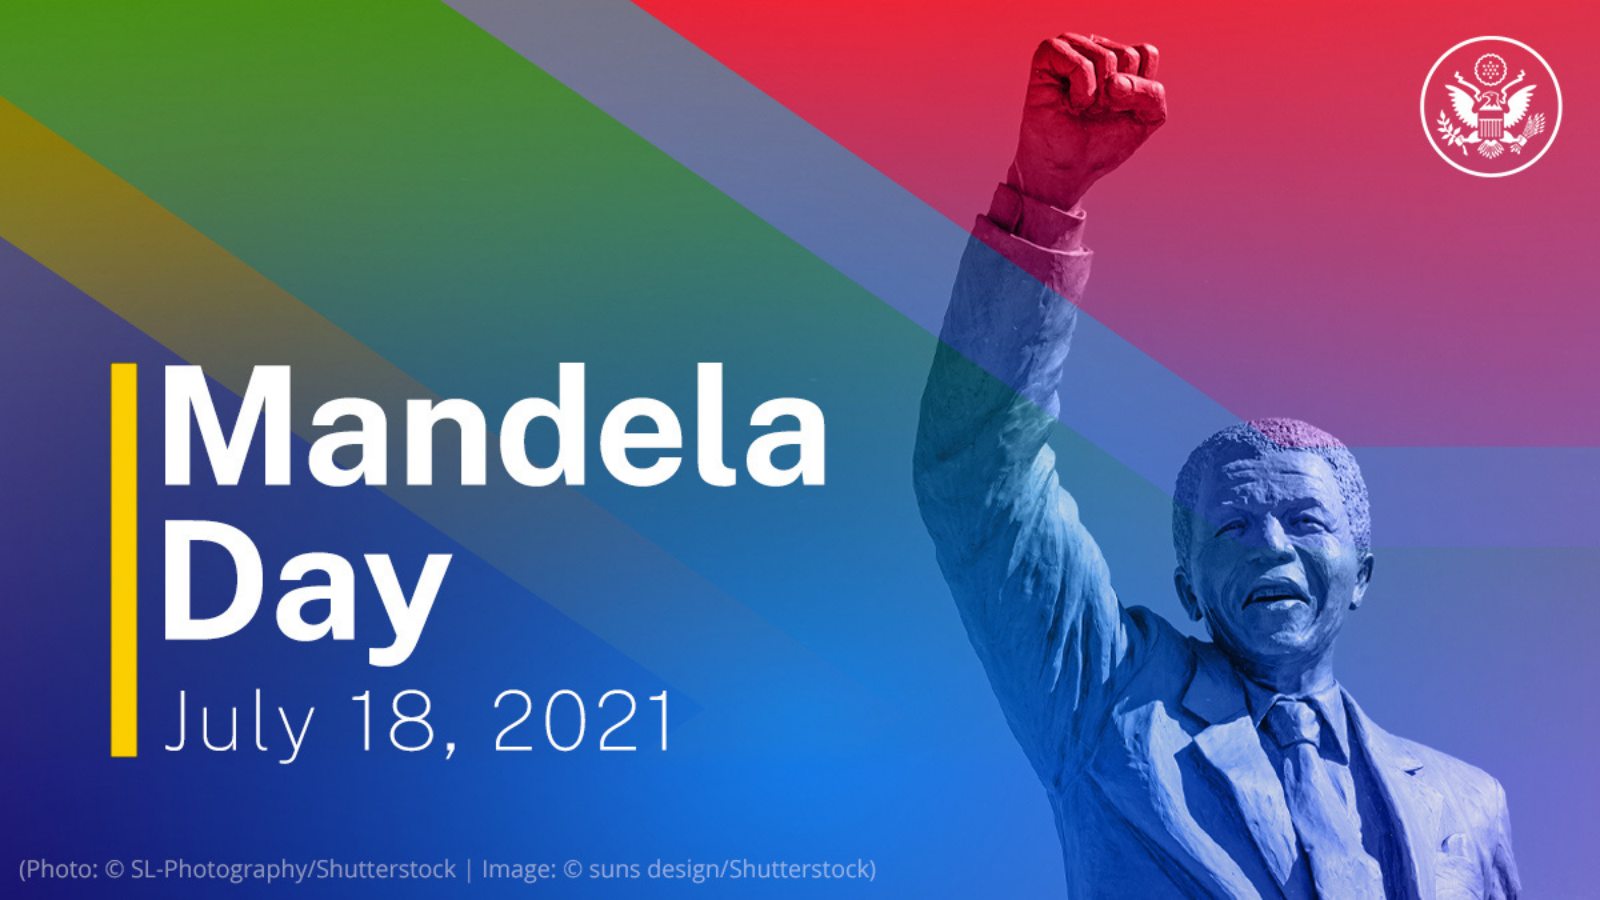 Mandela Day: July 18, 2021